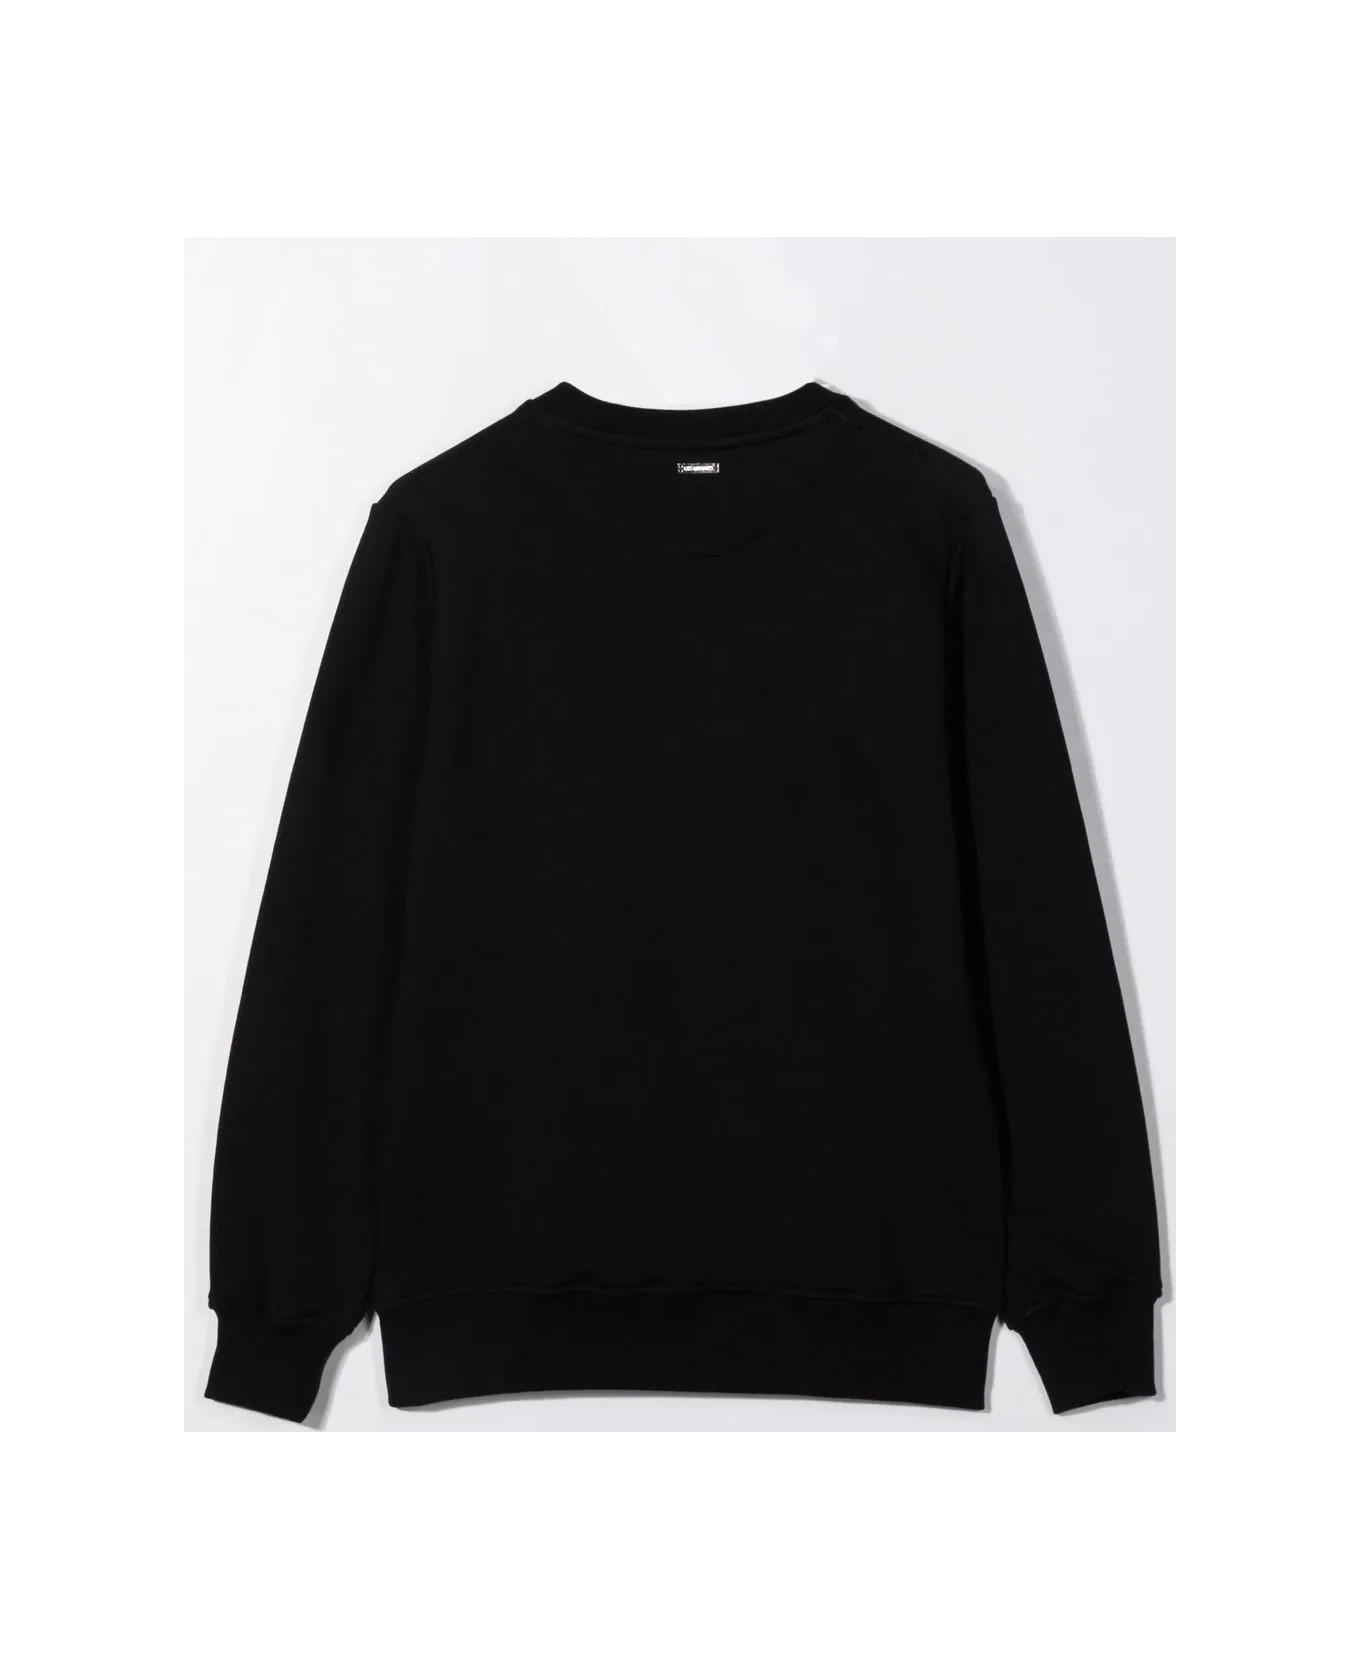 Les Hommes Sweatshirt With Print - Black ニットウェア＆スウェットシャツ